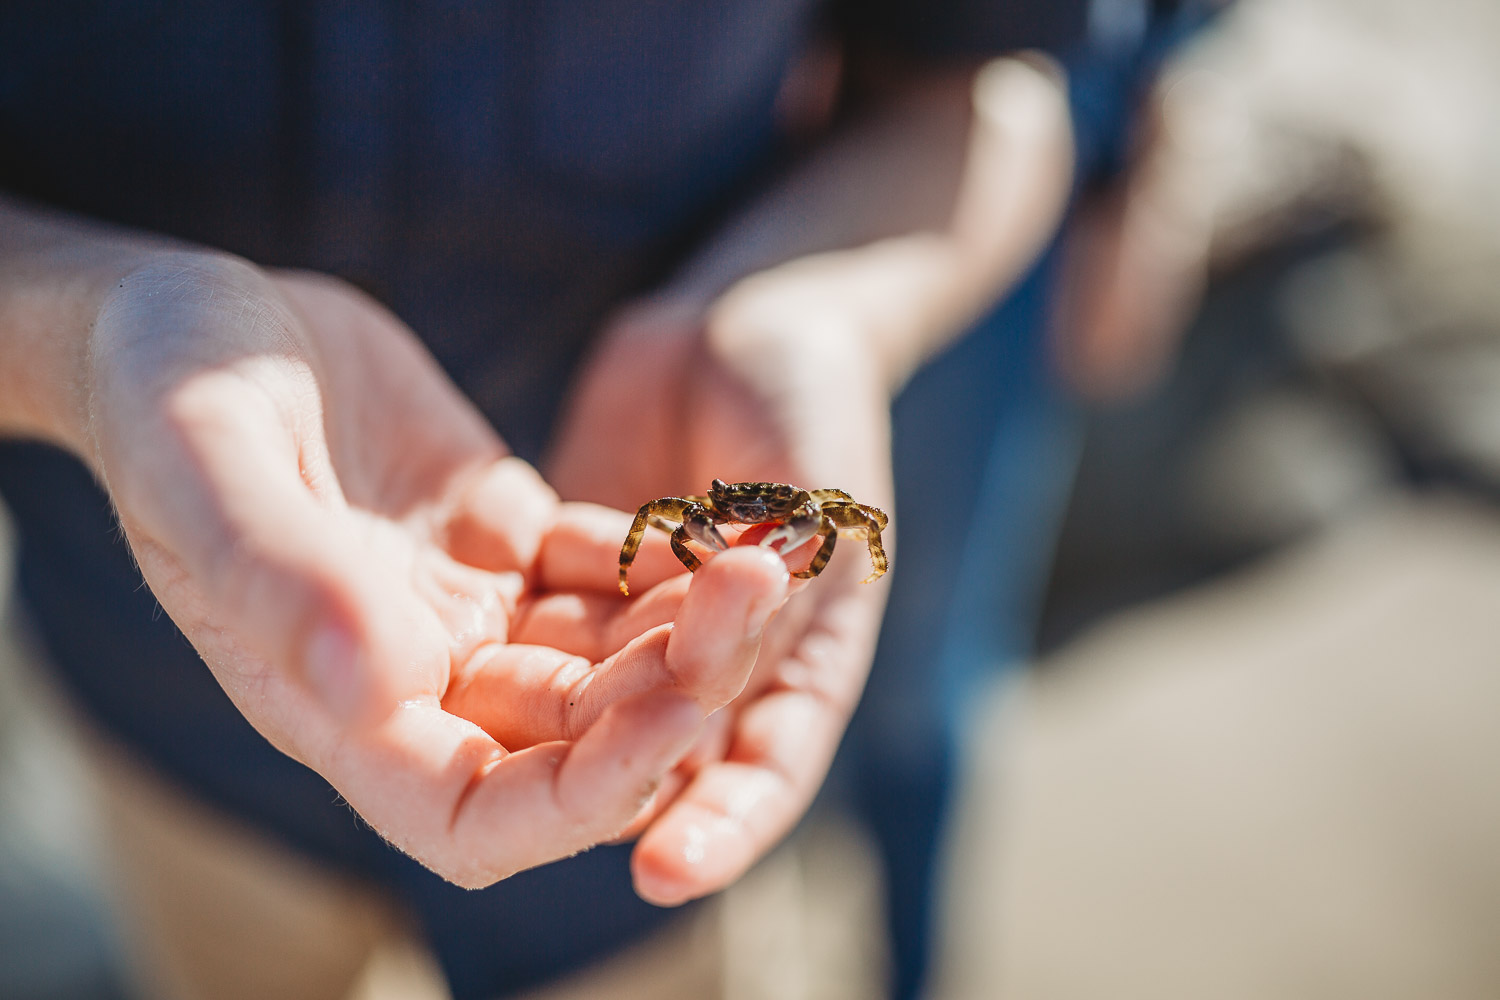 Boy holding crab